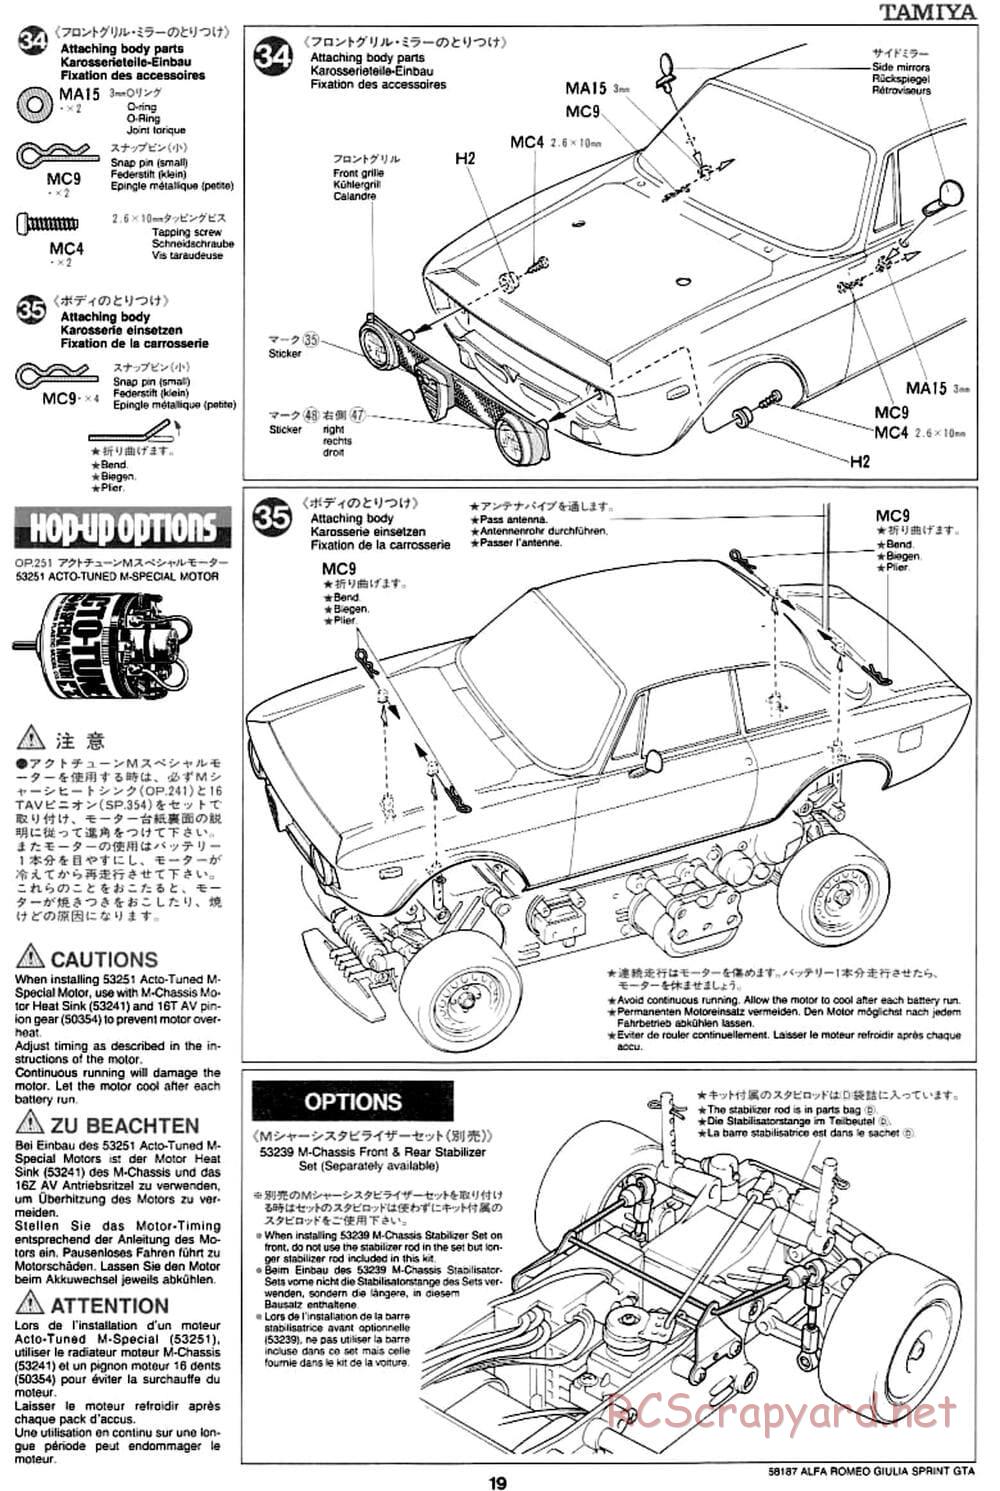 Tamiya - Alfa Romeo Giulia Sprint GTA - M02M Chassis - Manual - Page 19